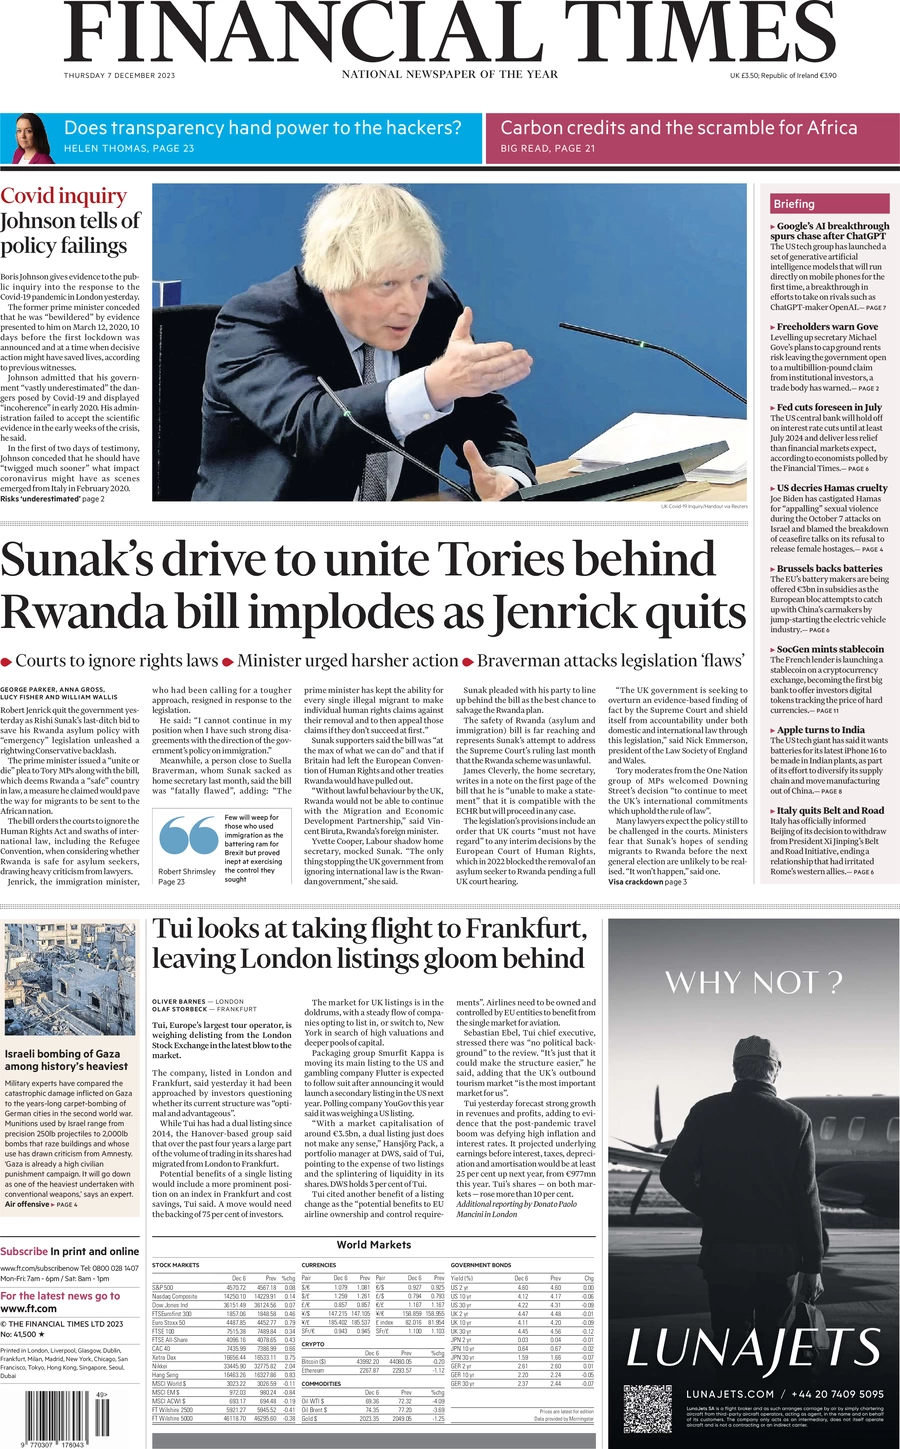 Financial Times - Sunak’s drive to unite Tories behind Rwanda bill implodes as Jenrick quits 